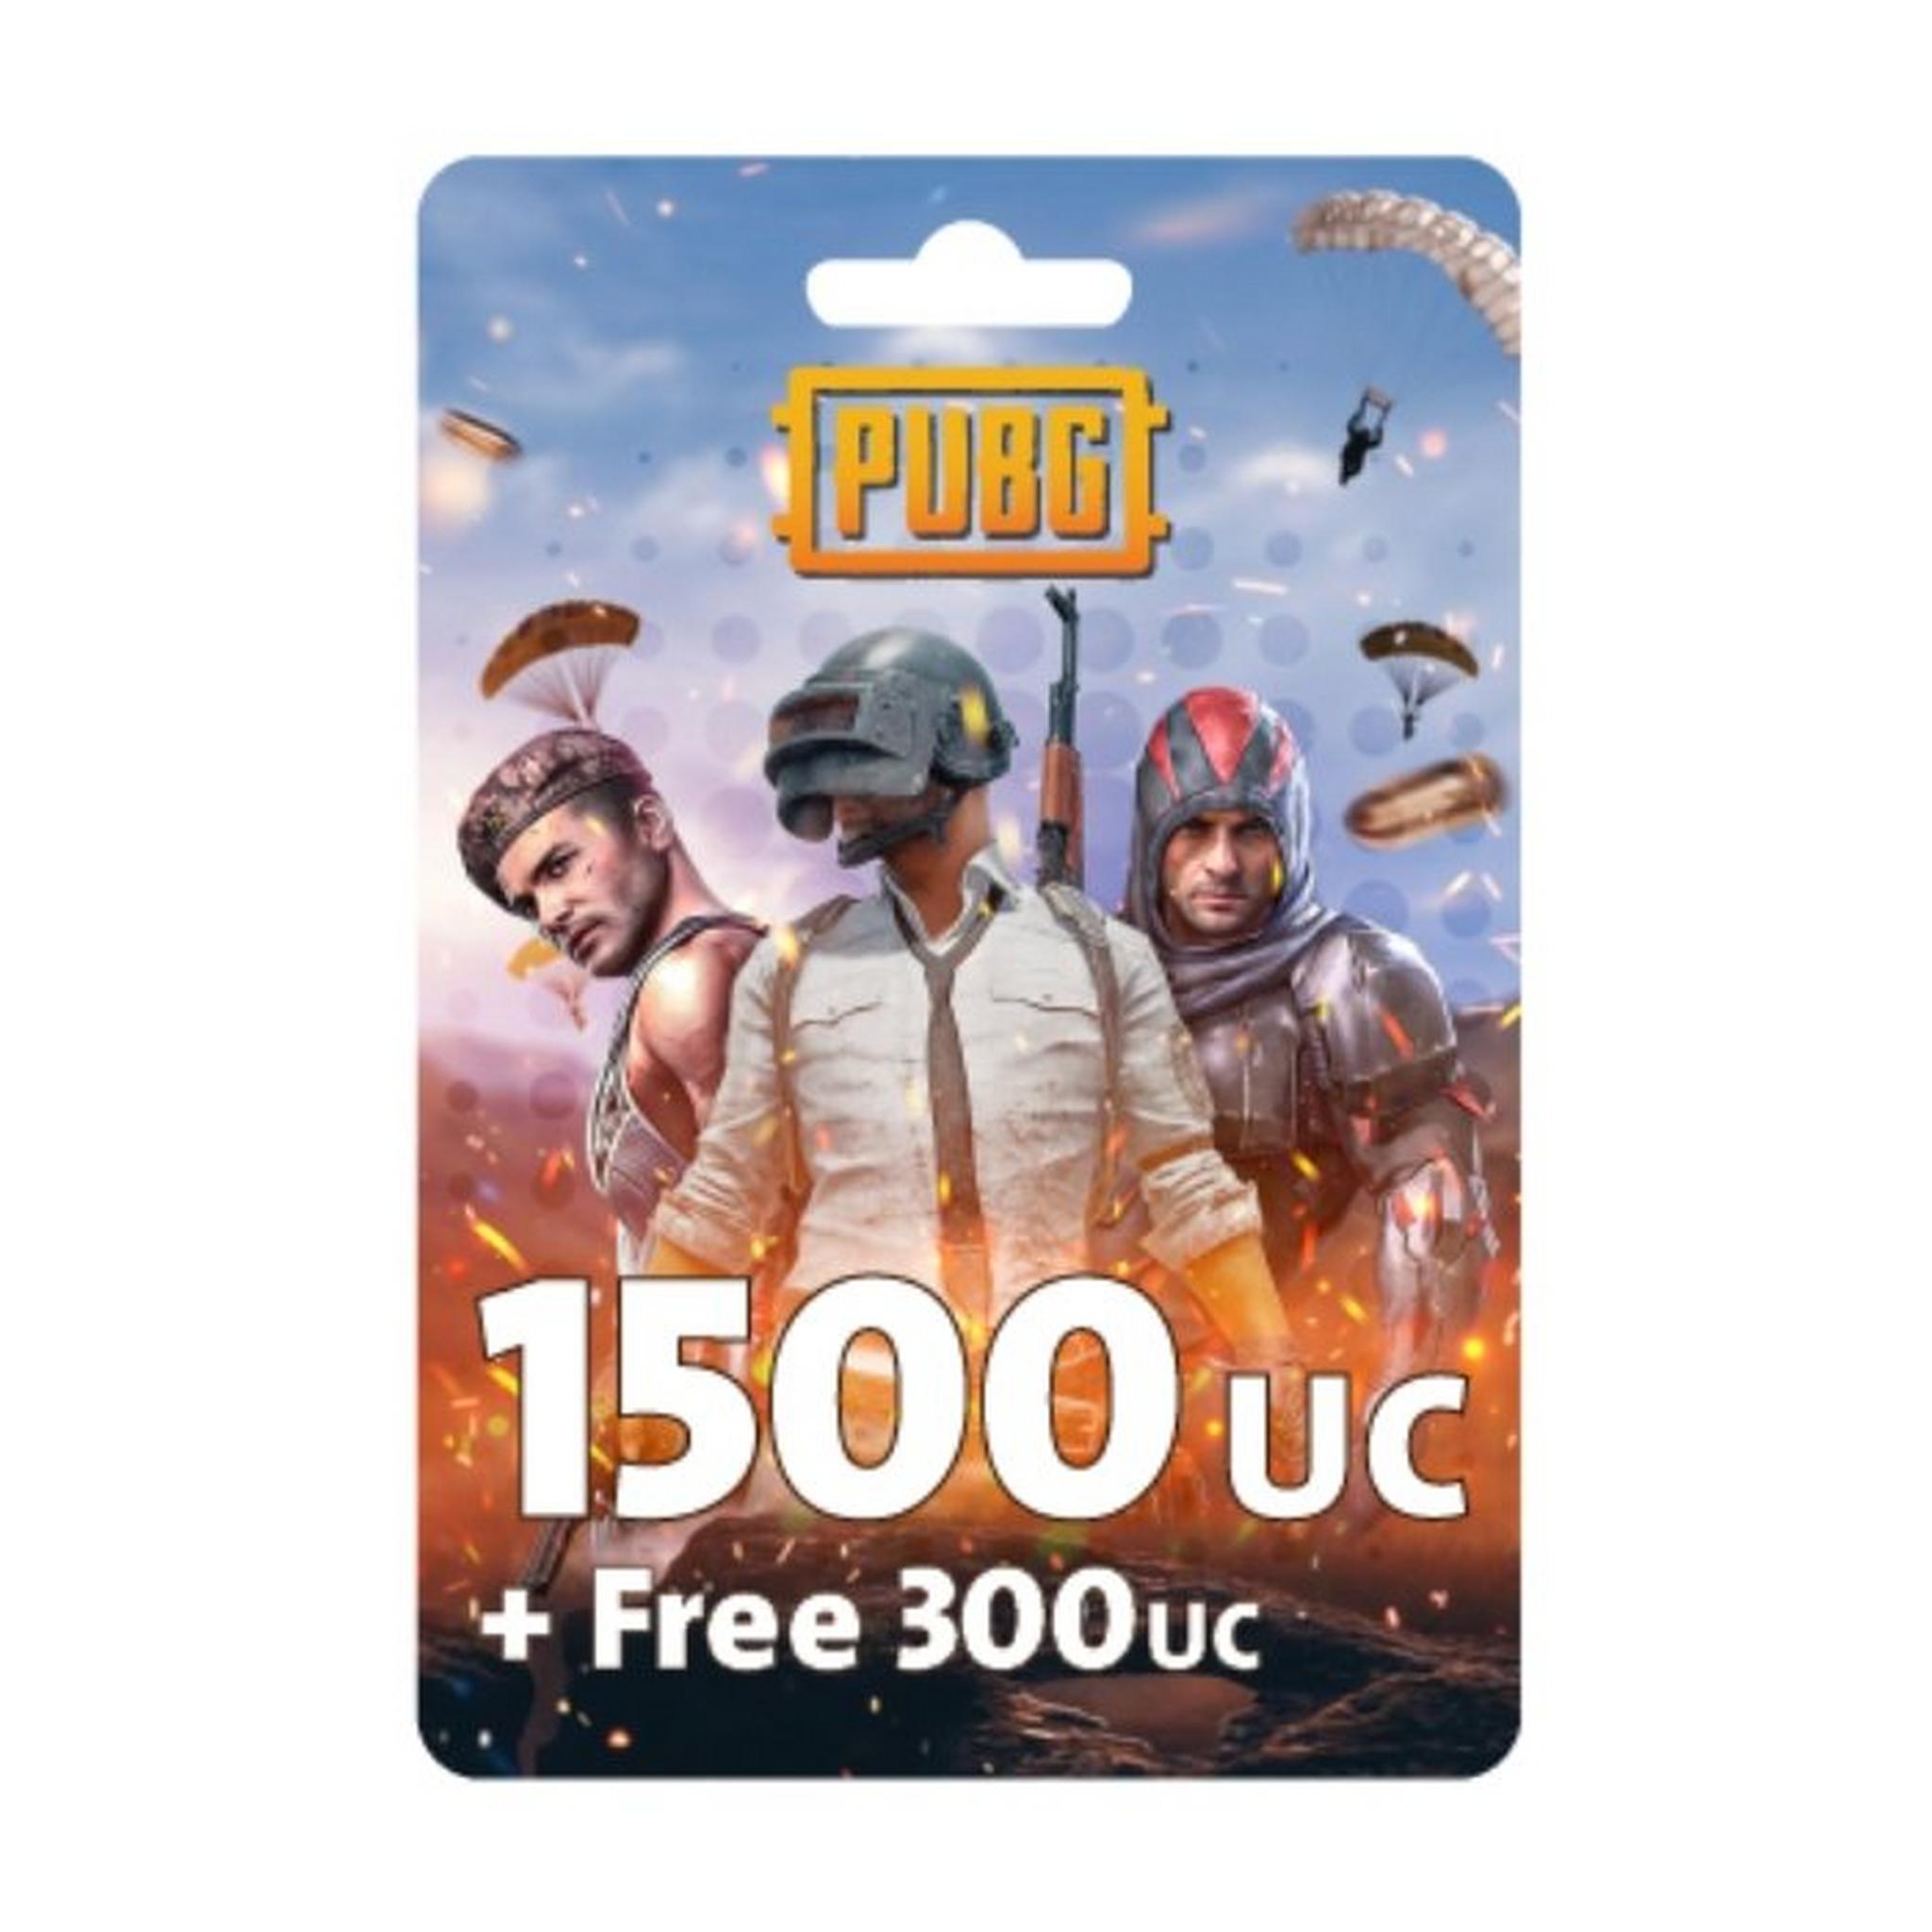 PUBG Game Point - (1500 + Free 300 UC) - $24.99